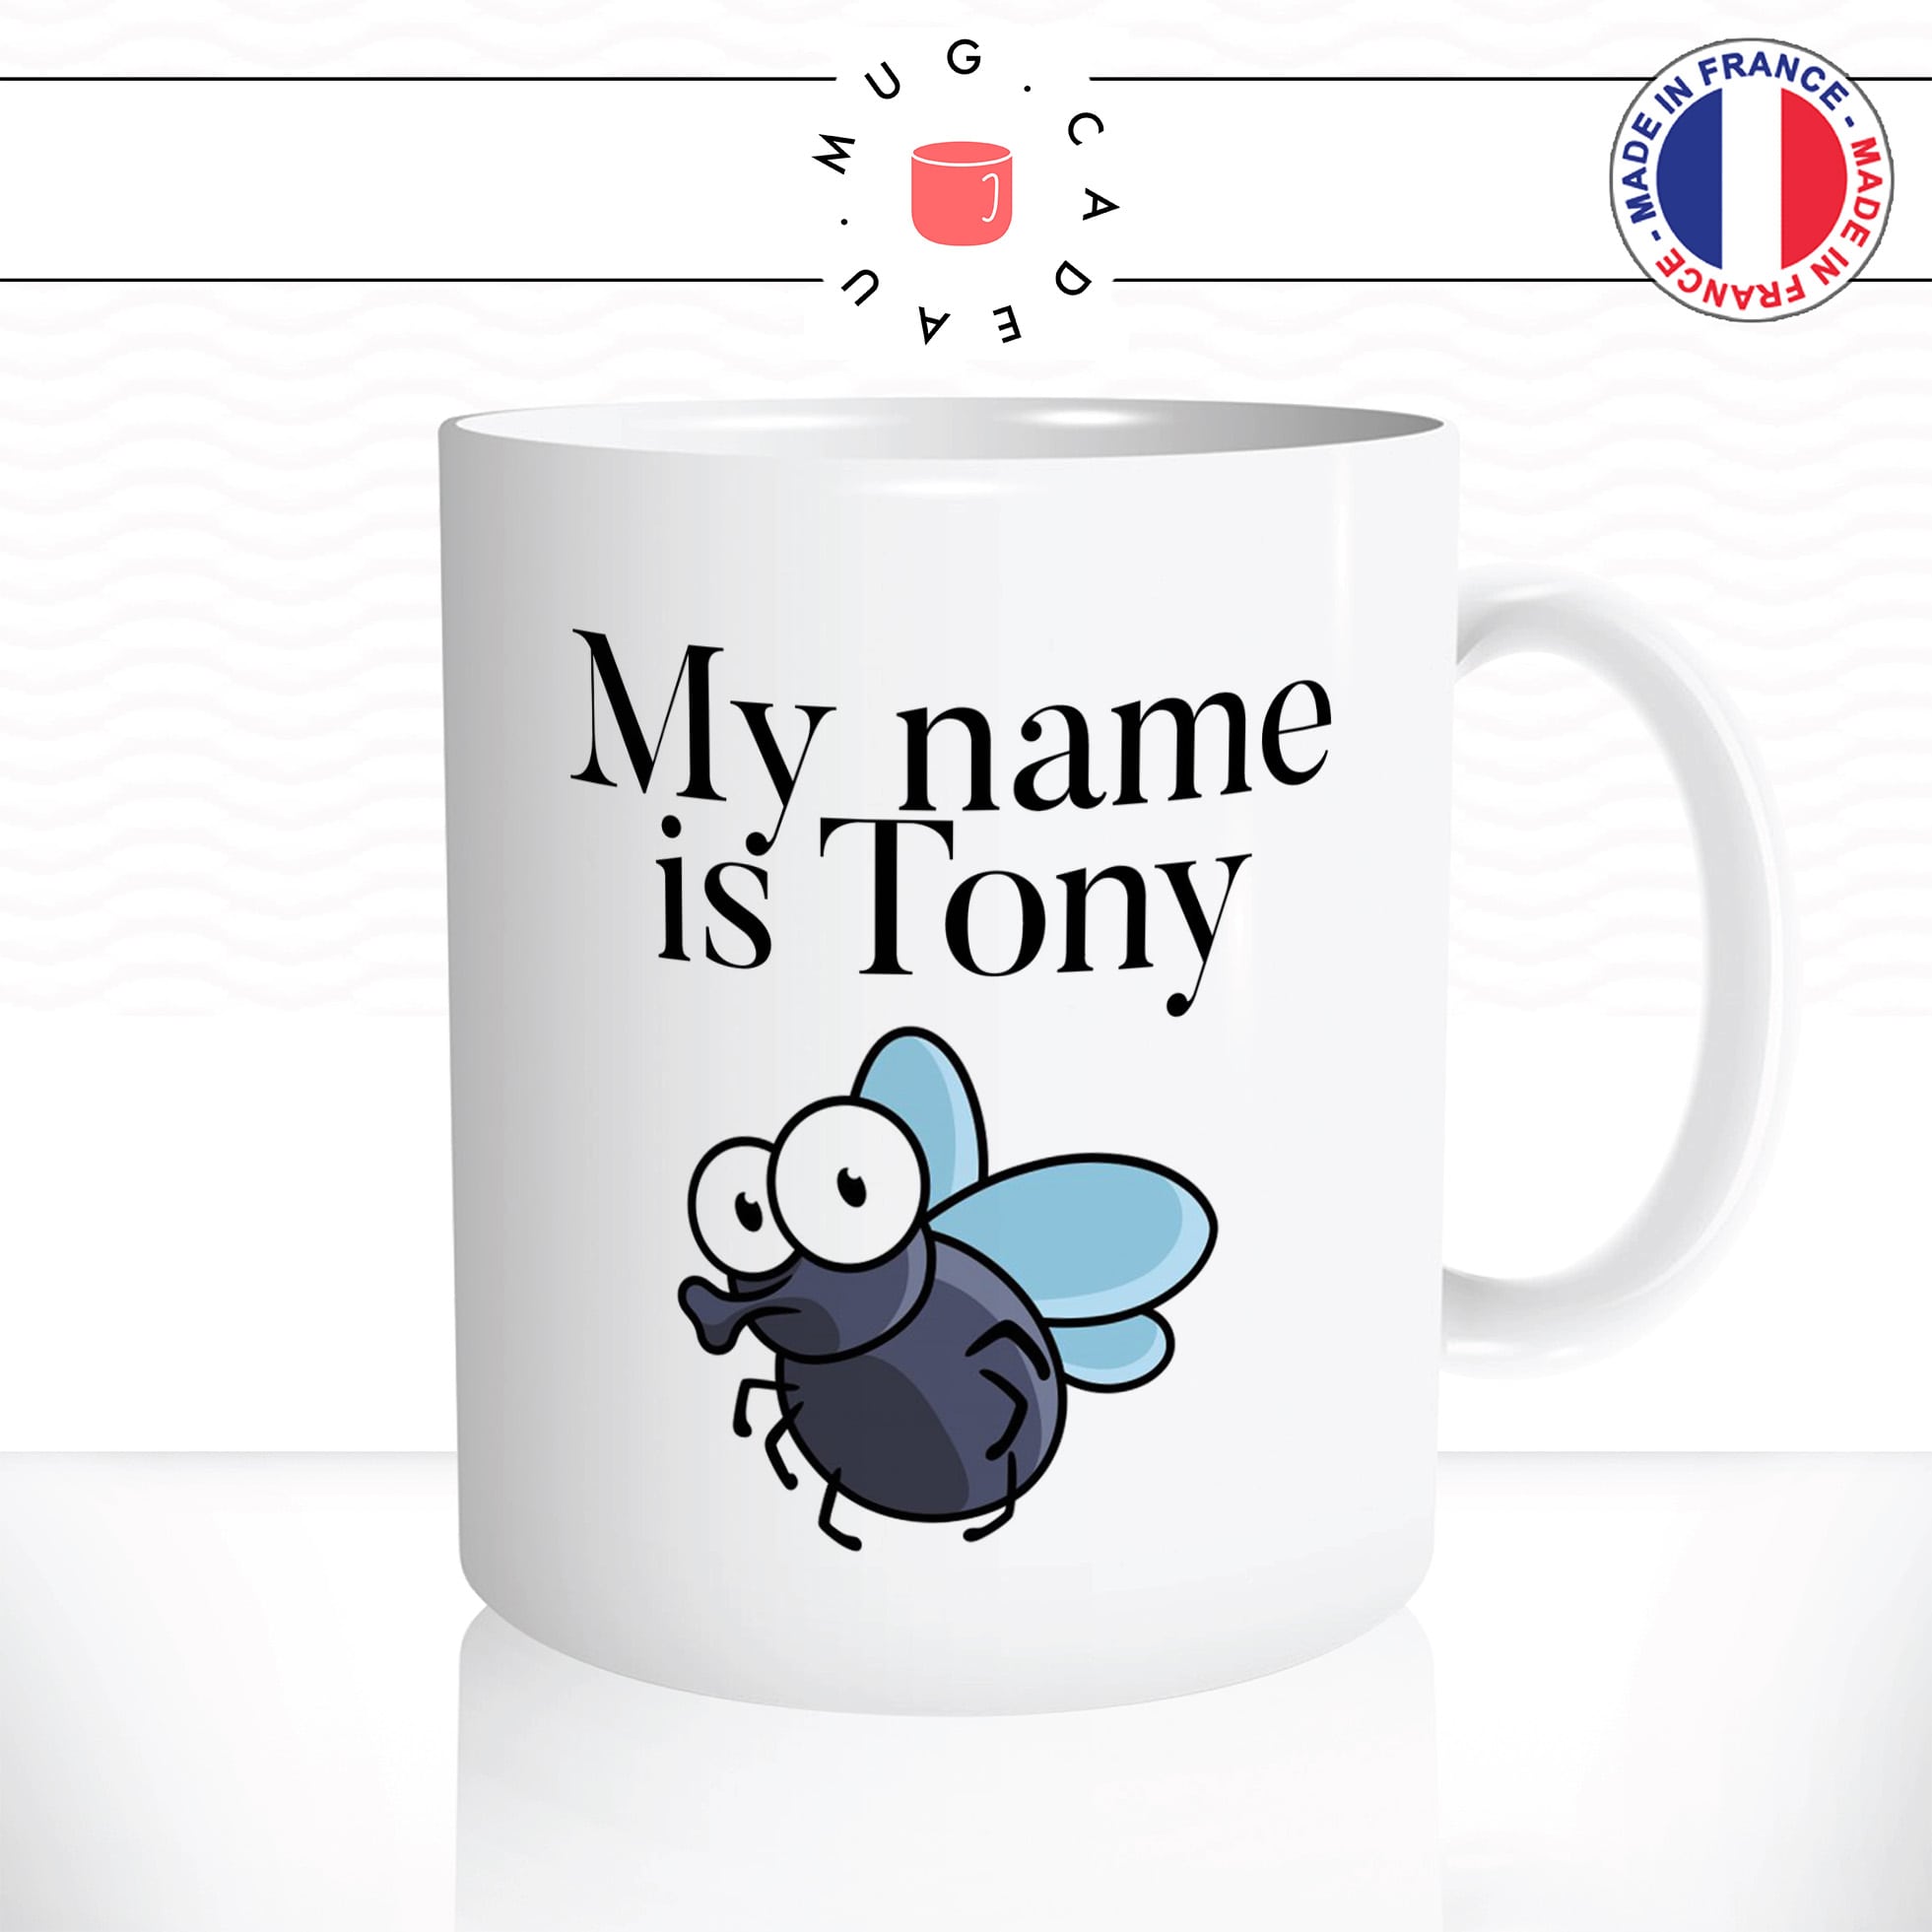 mug-tasse-my-name-is-tony-malcolm-dewey-mouche-offrir-fun-humour-idée-cadeau-original-personnalisée2-min